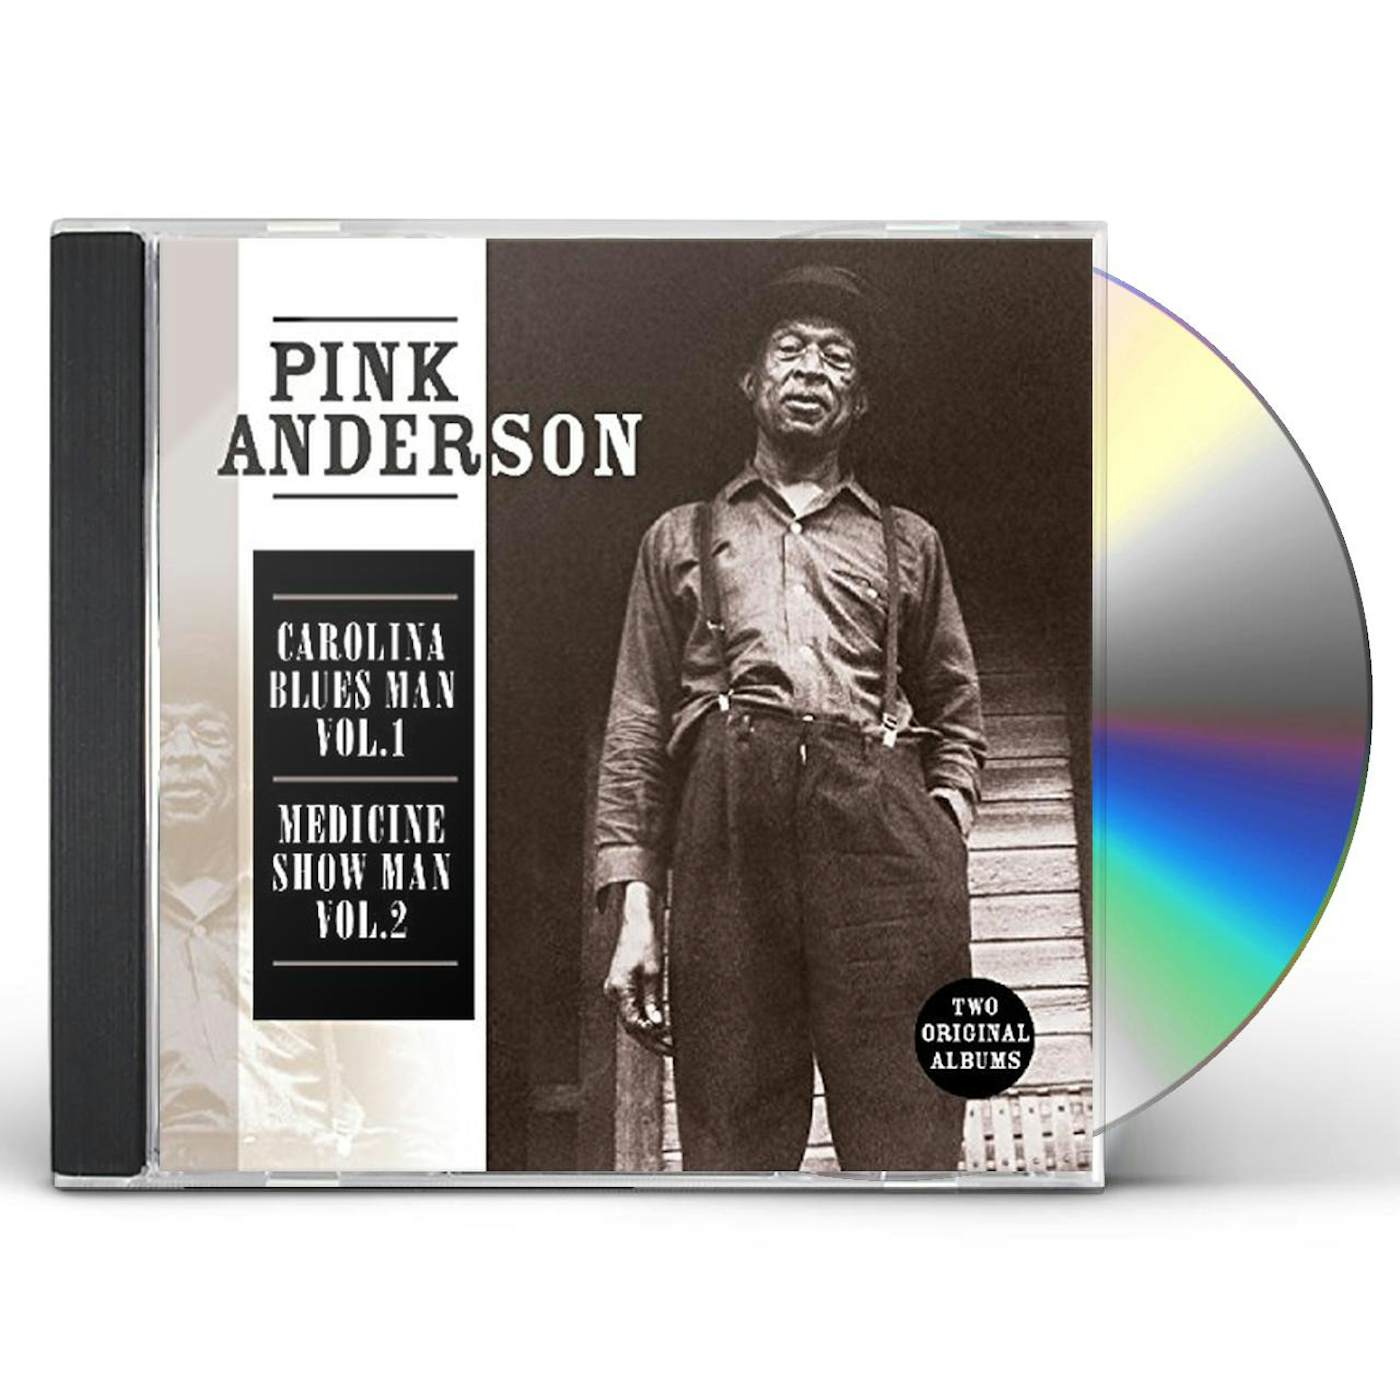 Pink Anderson CAROLINA BLUES MAN & MEDICINE SHOW MAN CD